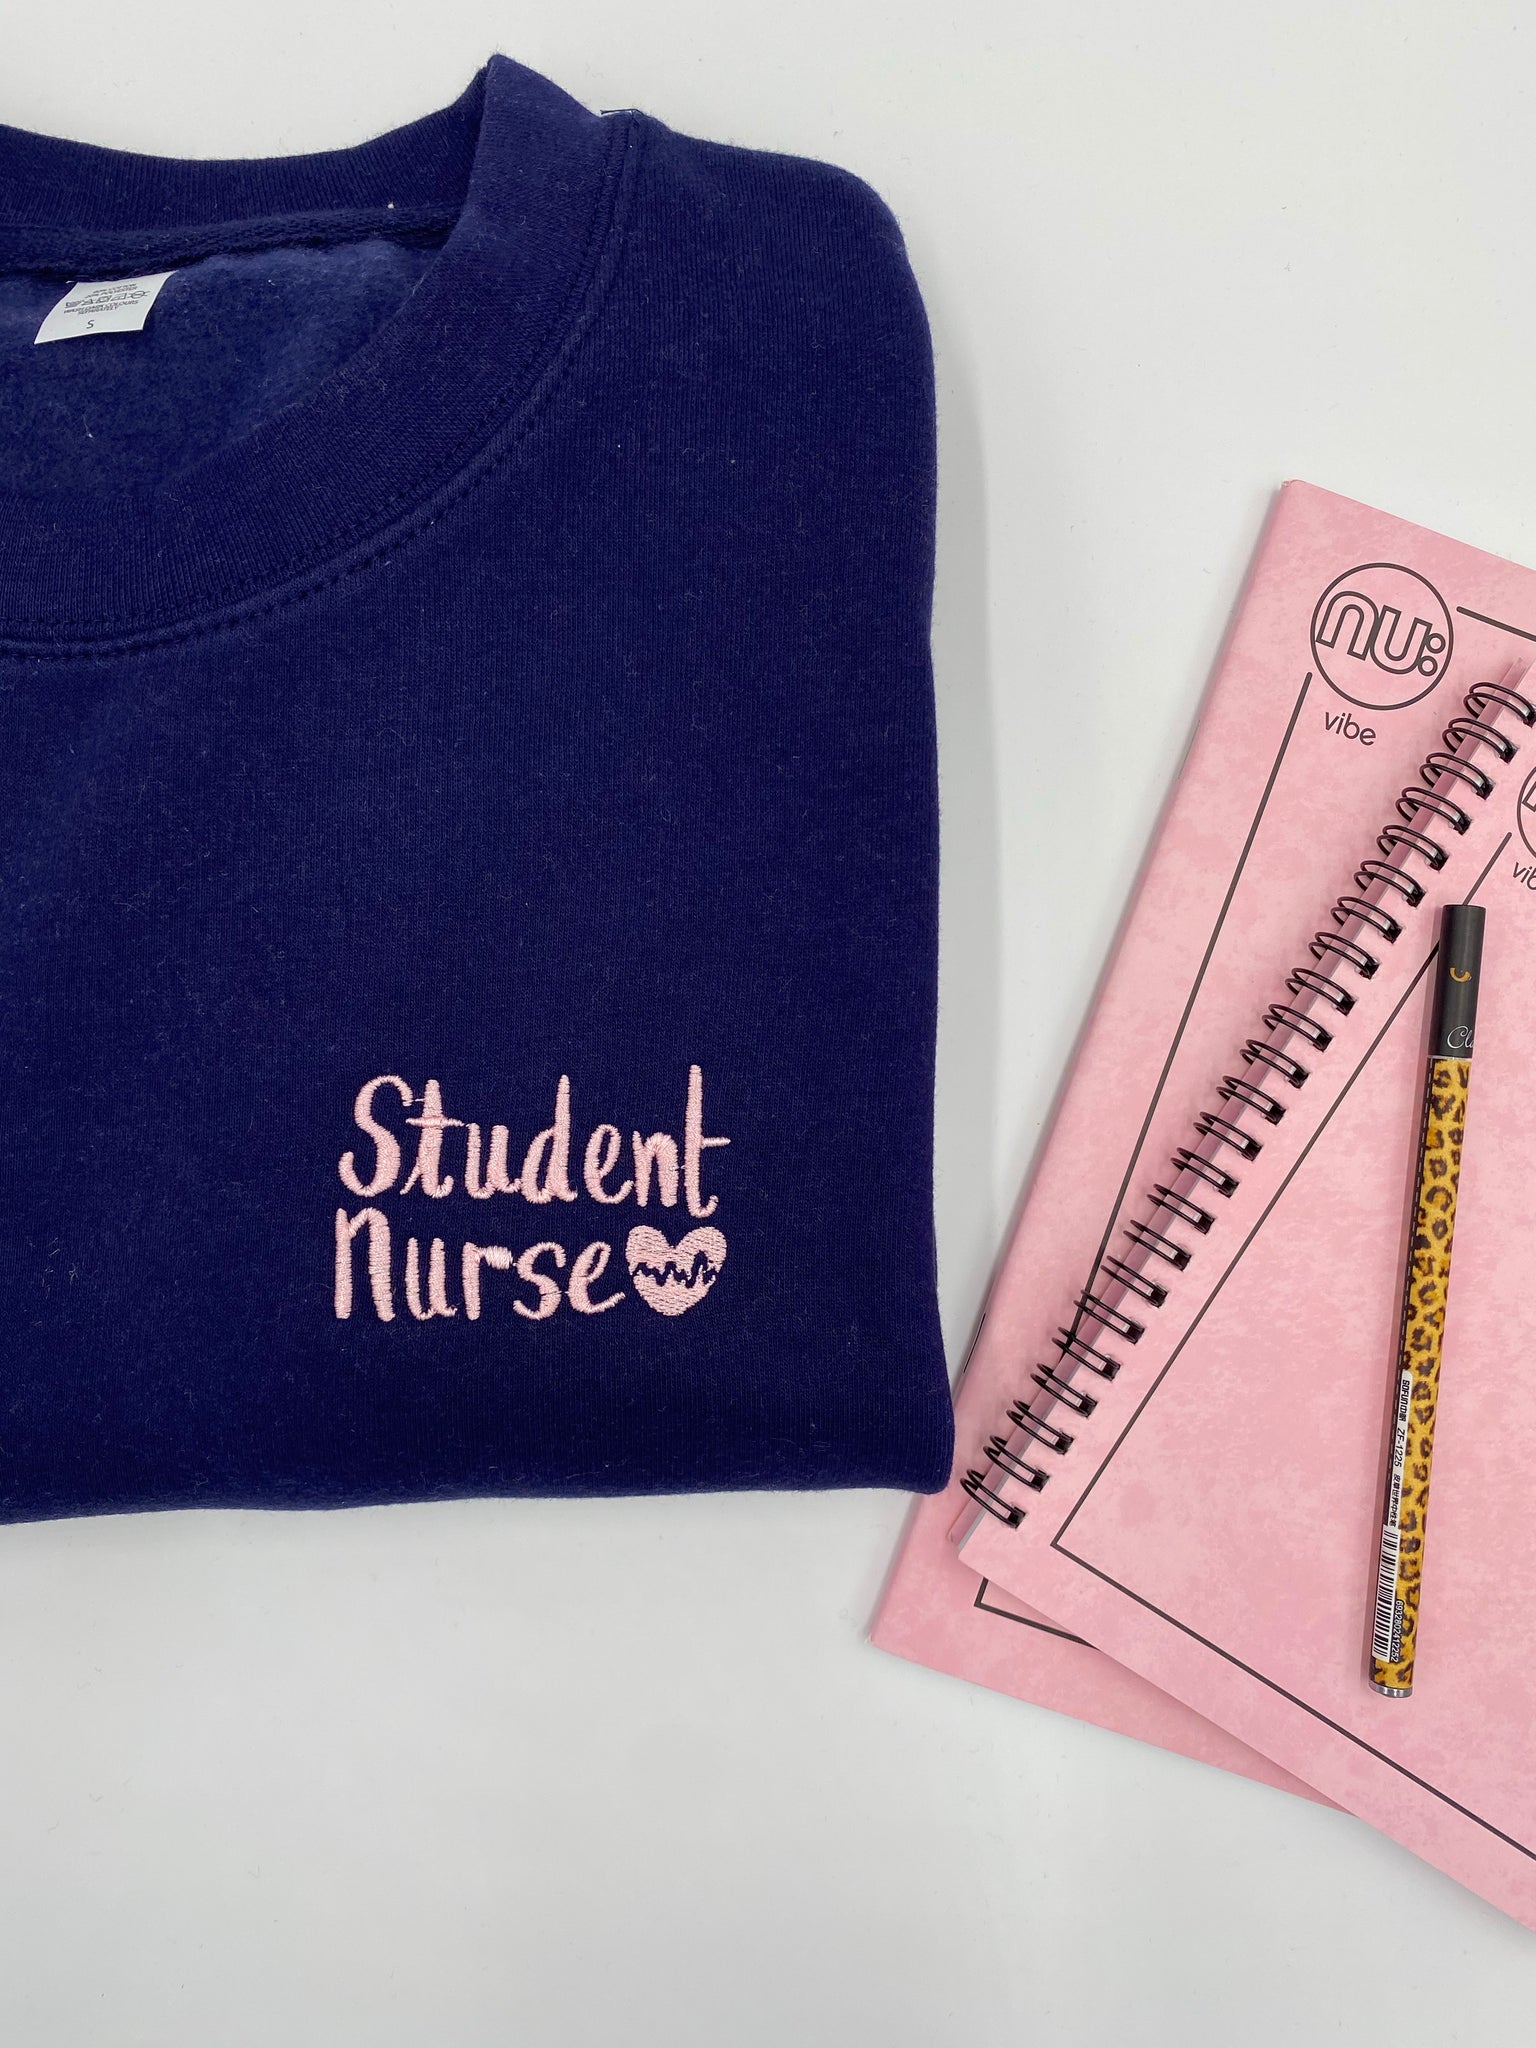 Student Nurse | Ted & Stitch